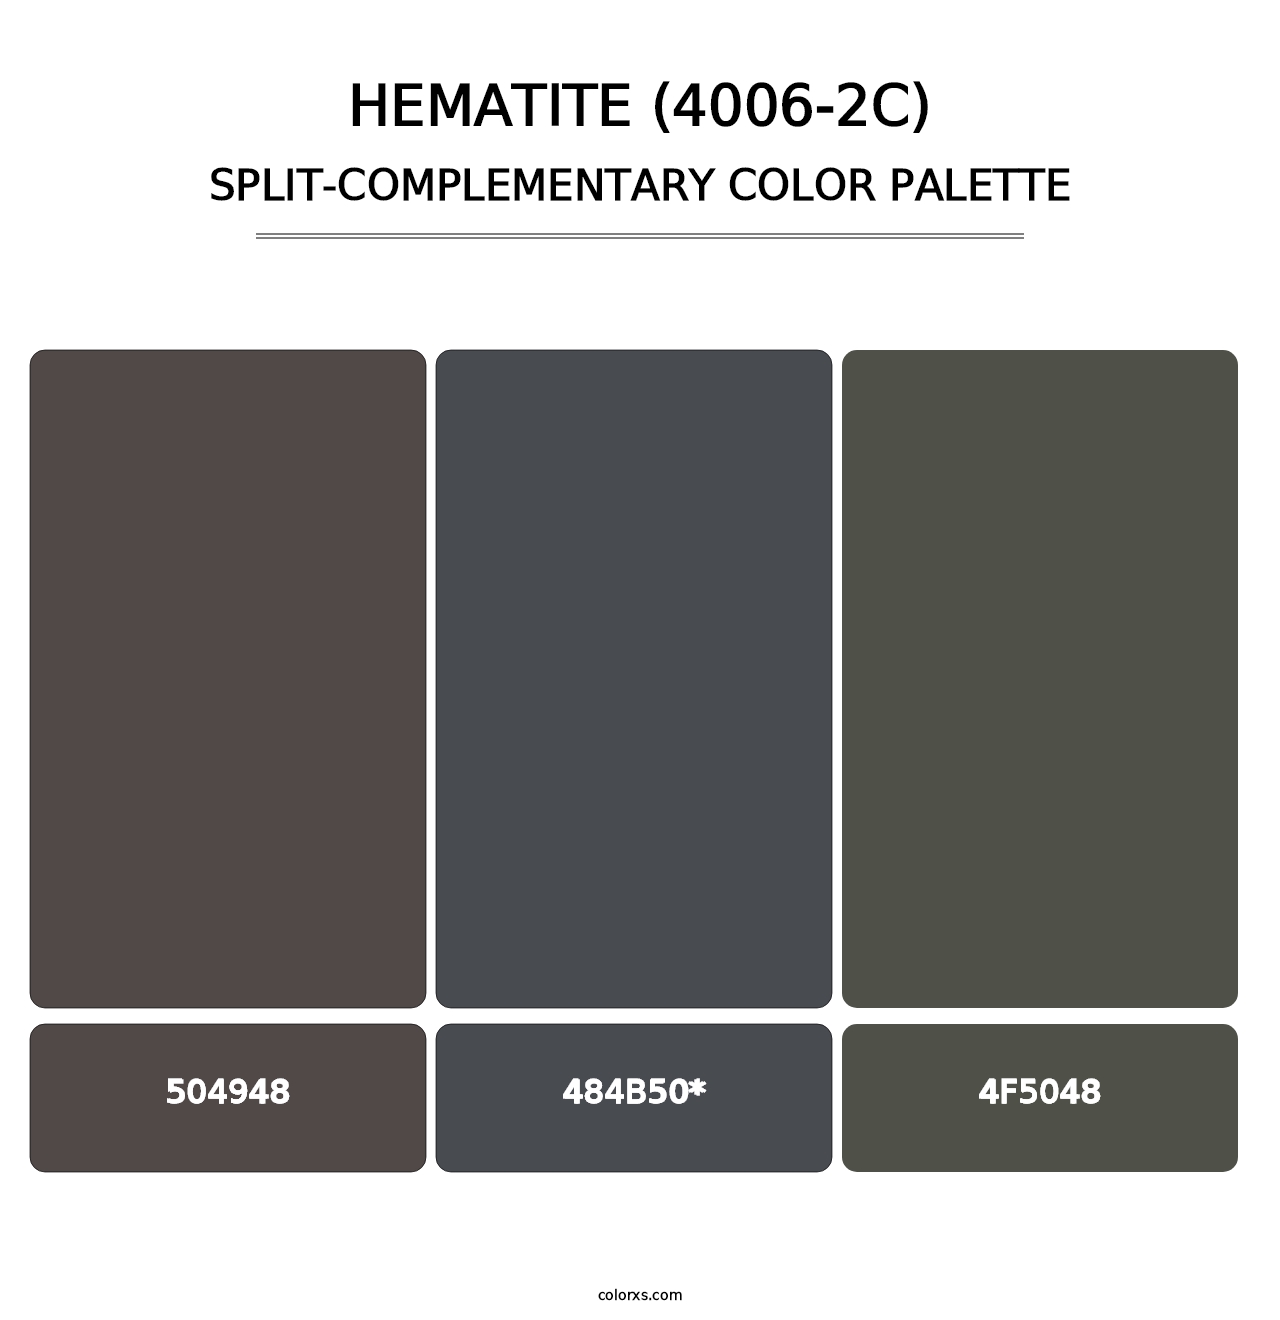 Hematite (4006-2C) - Split-Complementary Color Palette